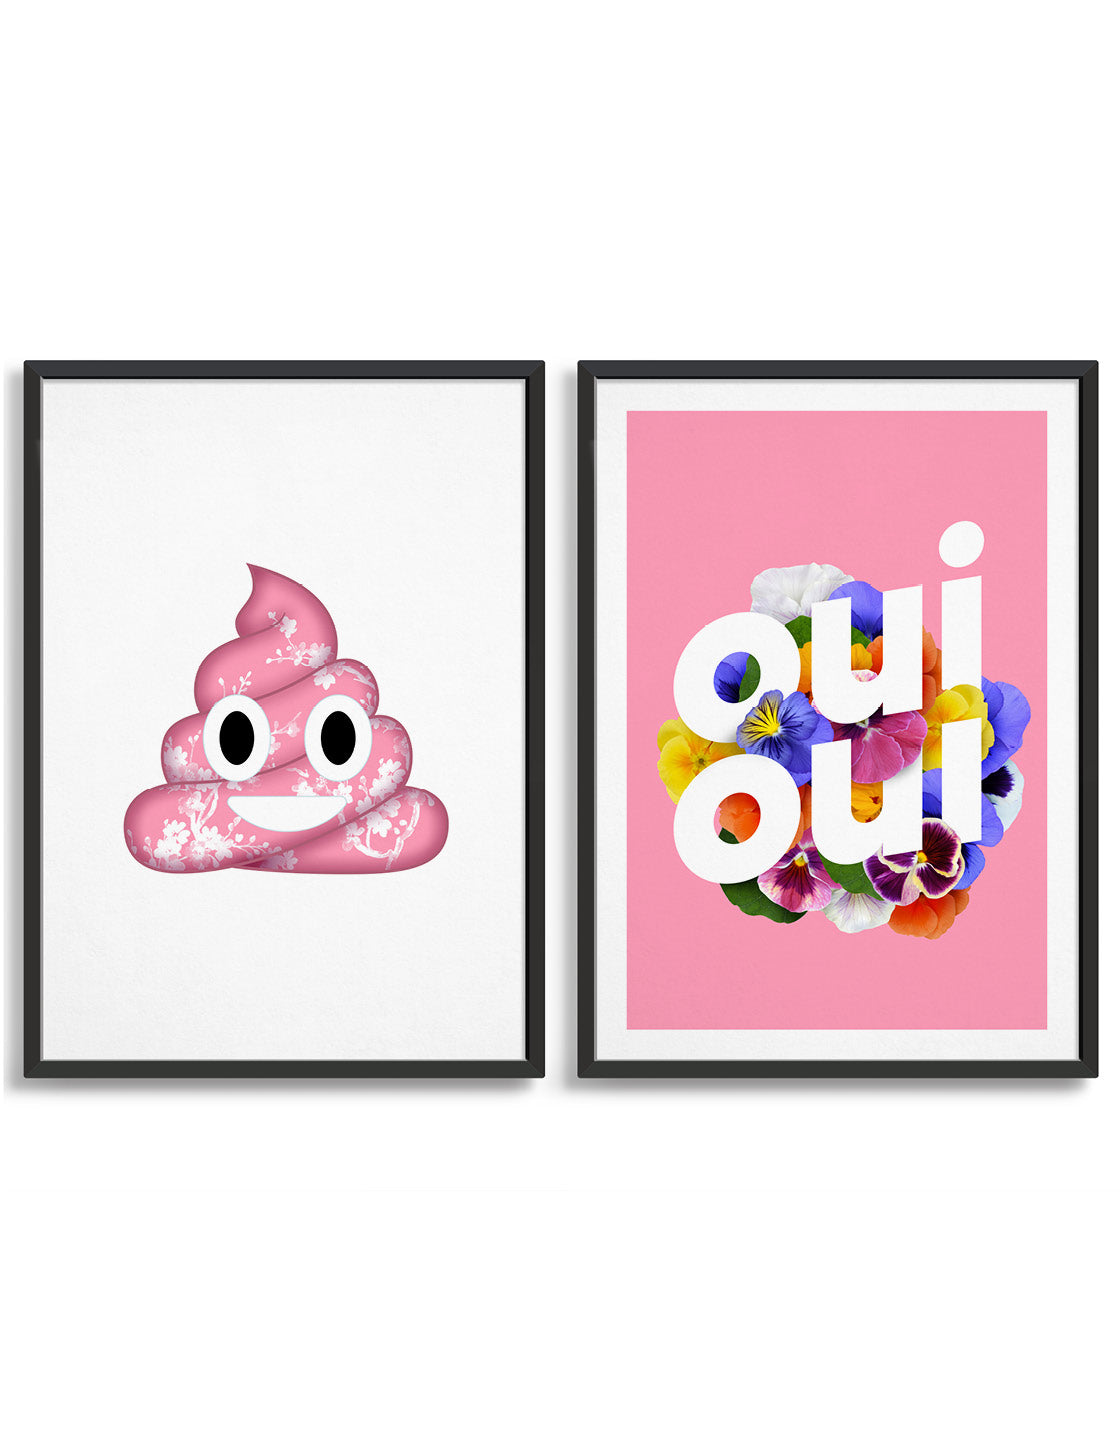 Image of pink Poo emoji and Oui Oui art print duo